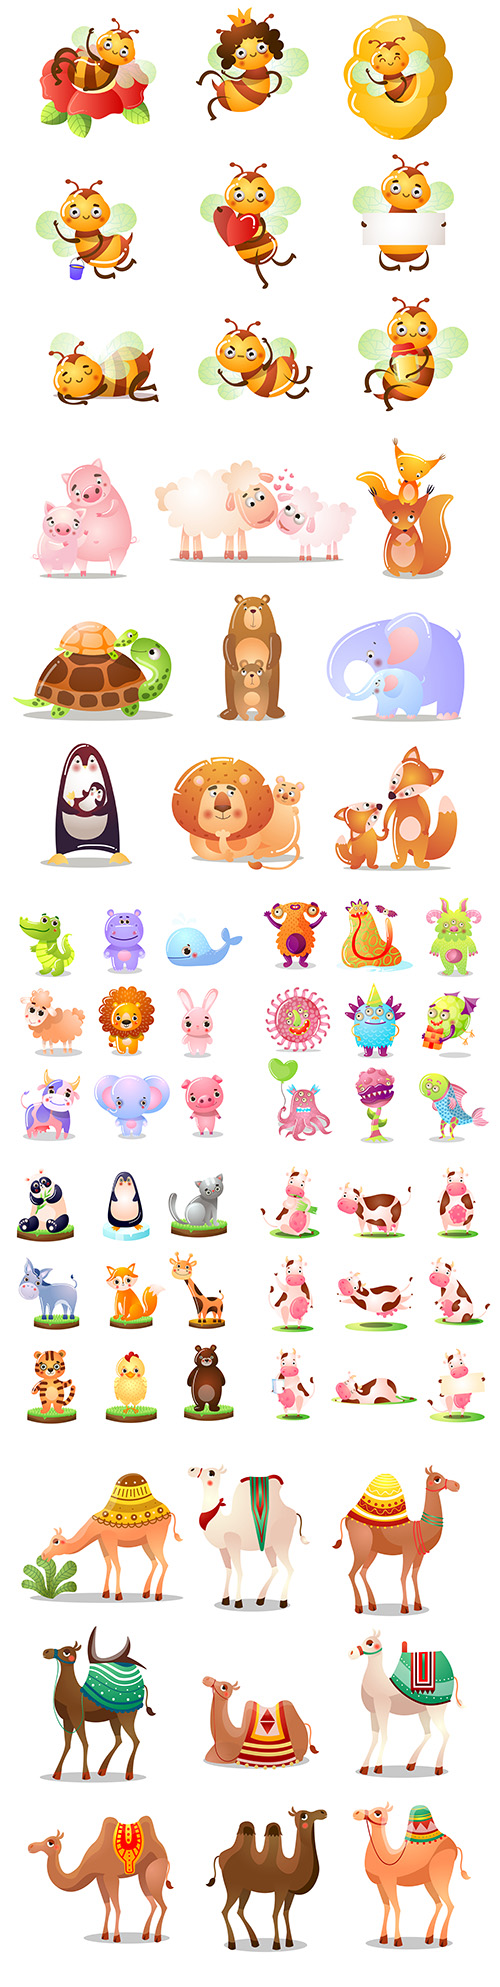 Set of cartoon funny cute animals illustrations
